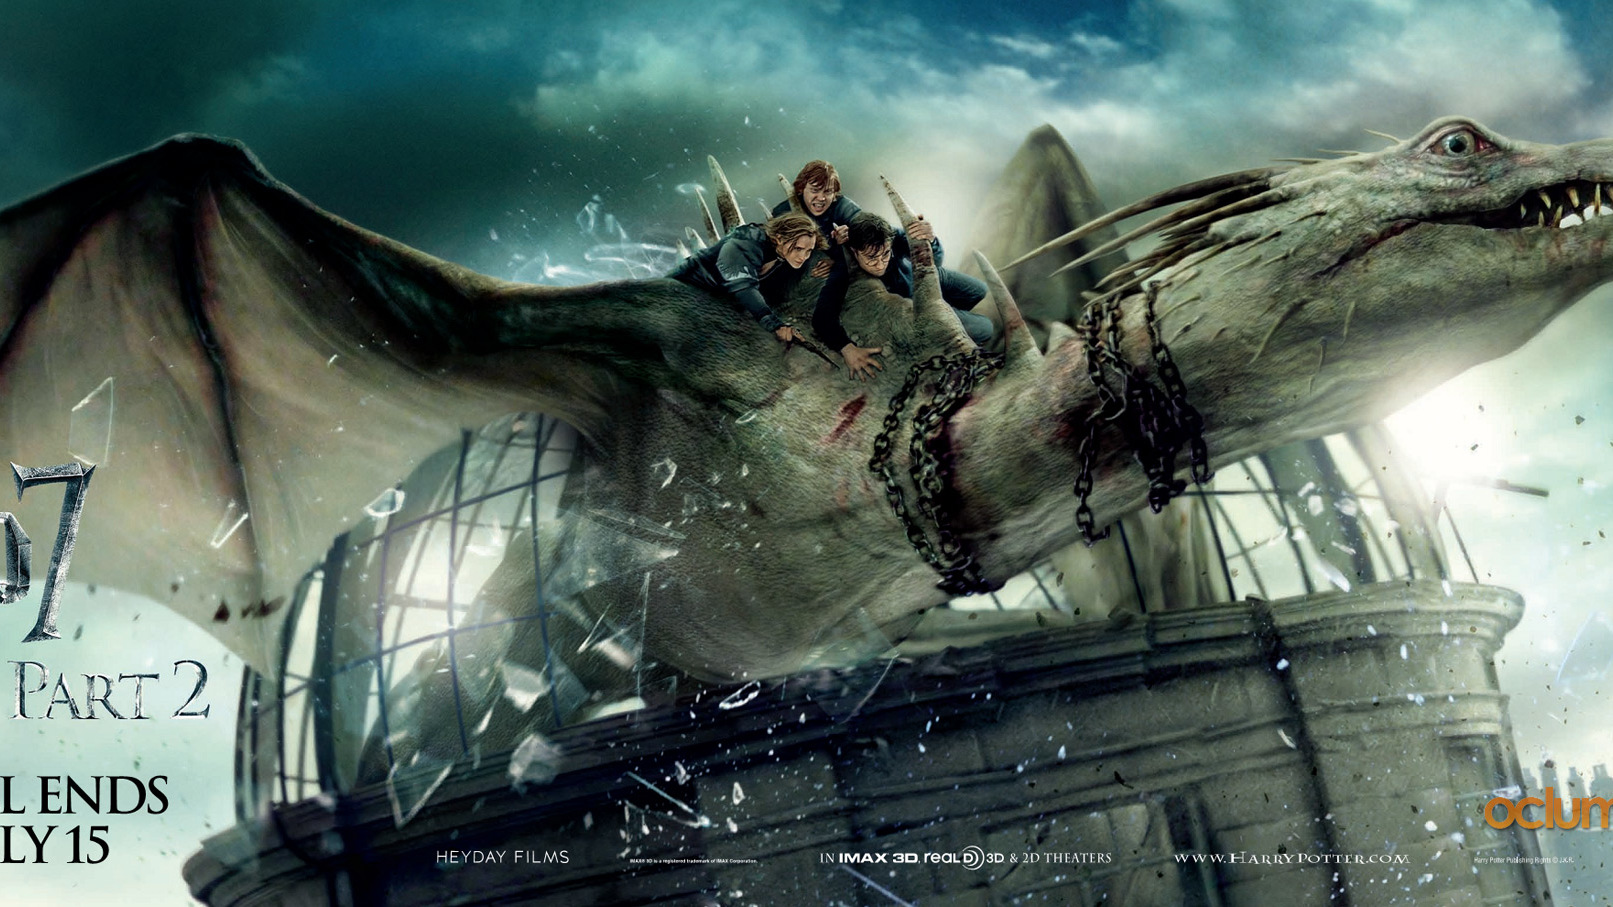 Harry Potter 7.2 poster: Gringotts' Dragon